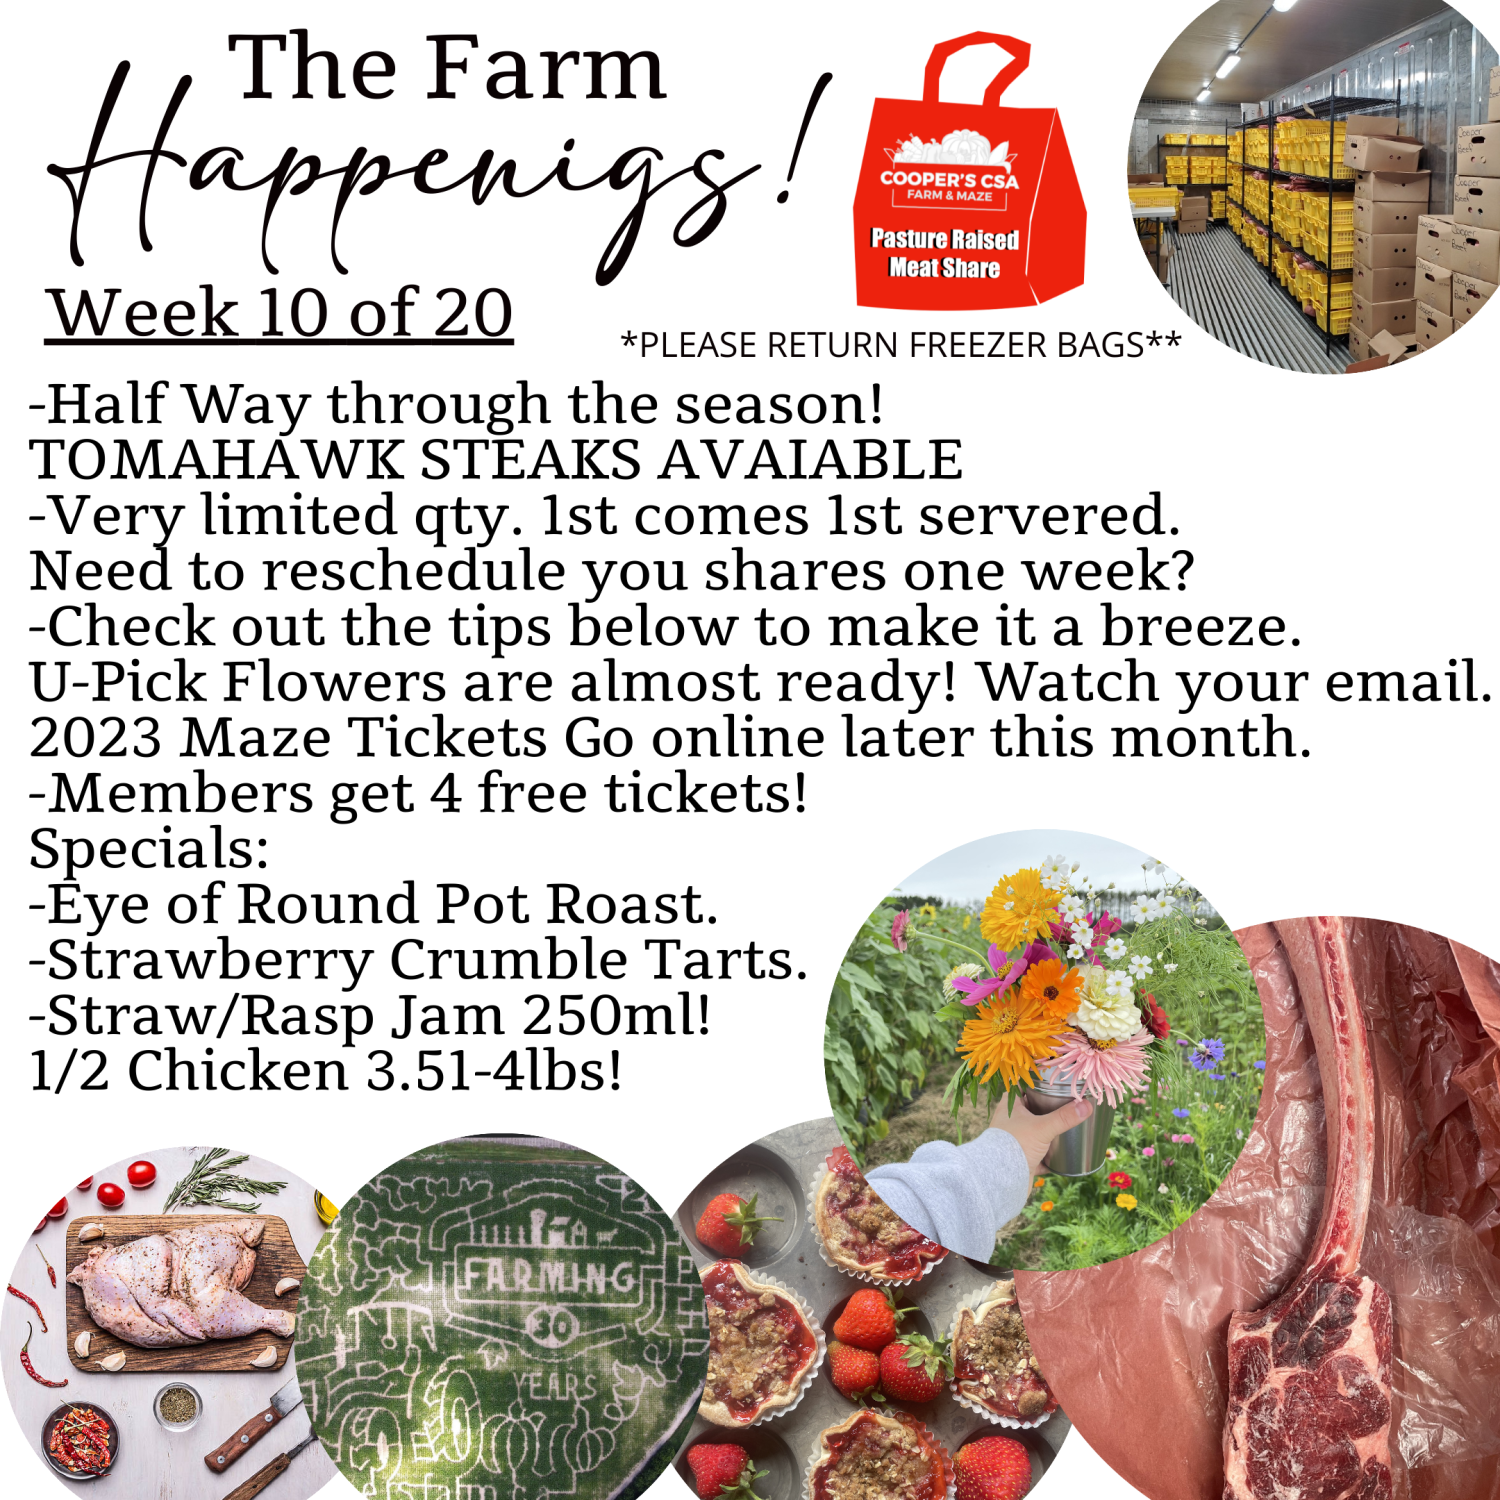 Next Happening: "Pasture Meat Shares"-Coopers CSA Farm Farm Happenings Week 10